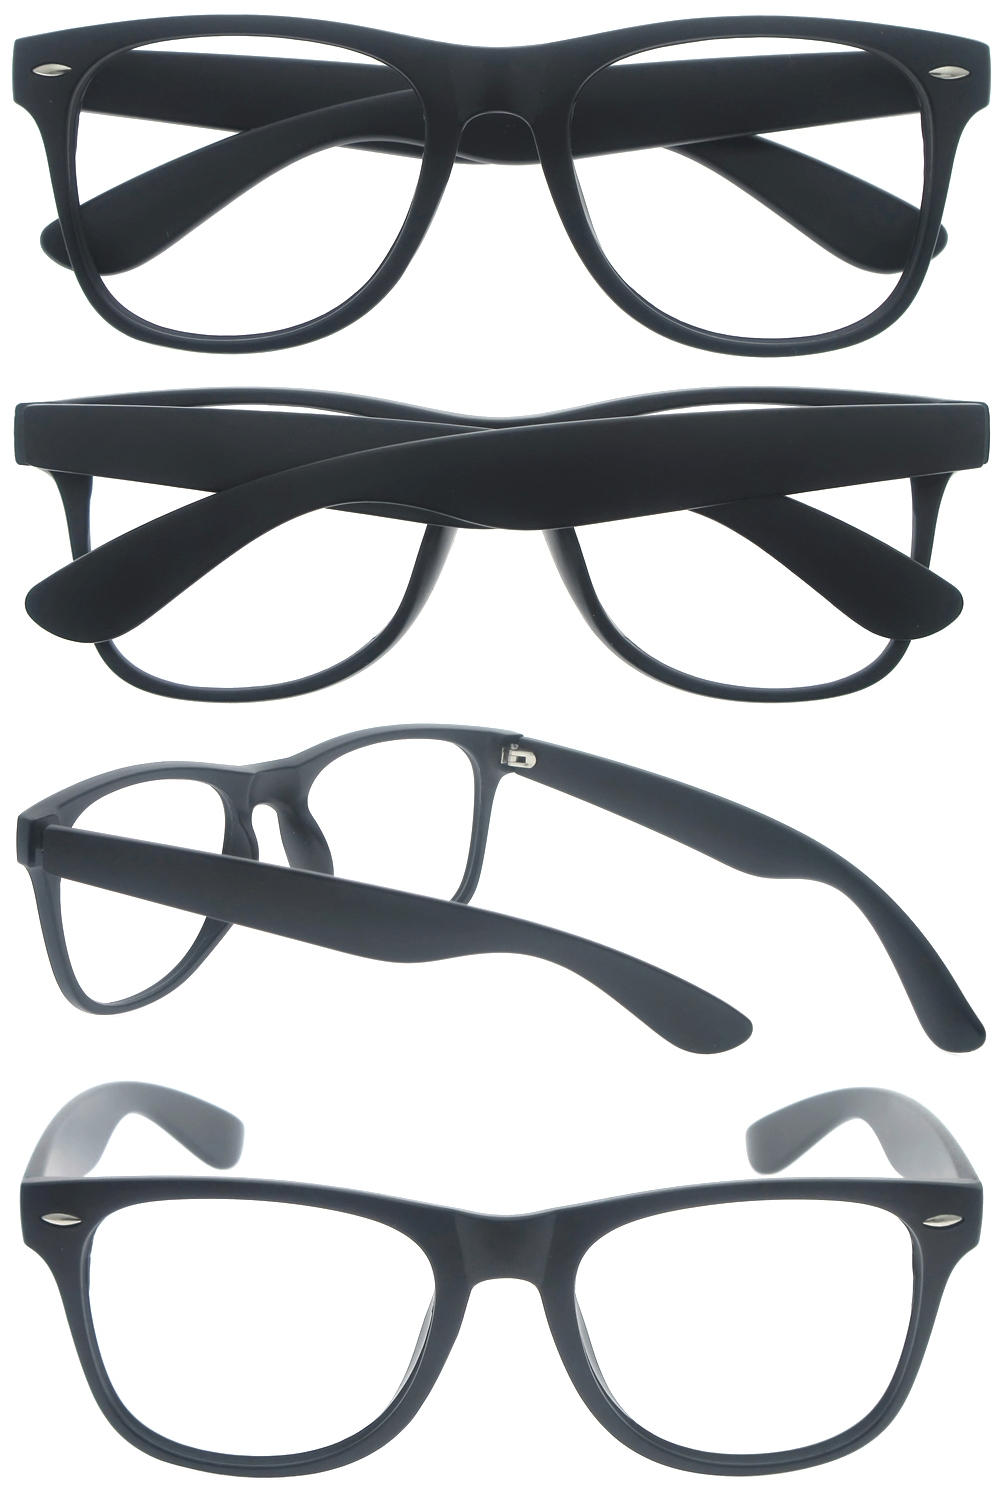 Dachuan Optical DSP348003 China Supplier Trendy Wayfarer Plastic Sunglasses With Metal Hinge (3)